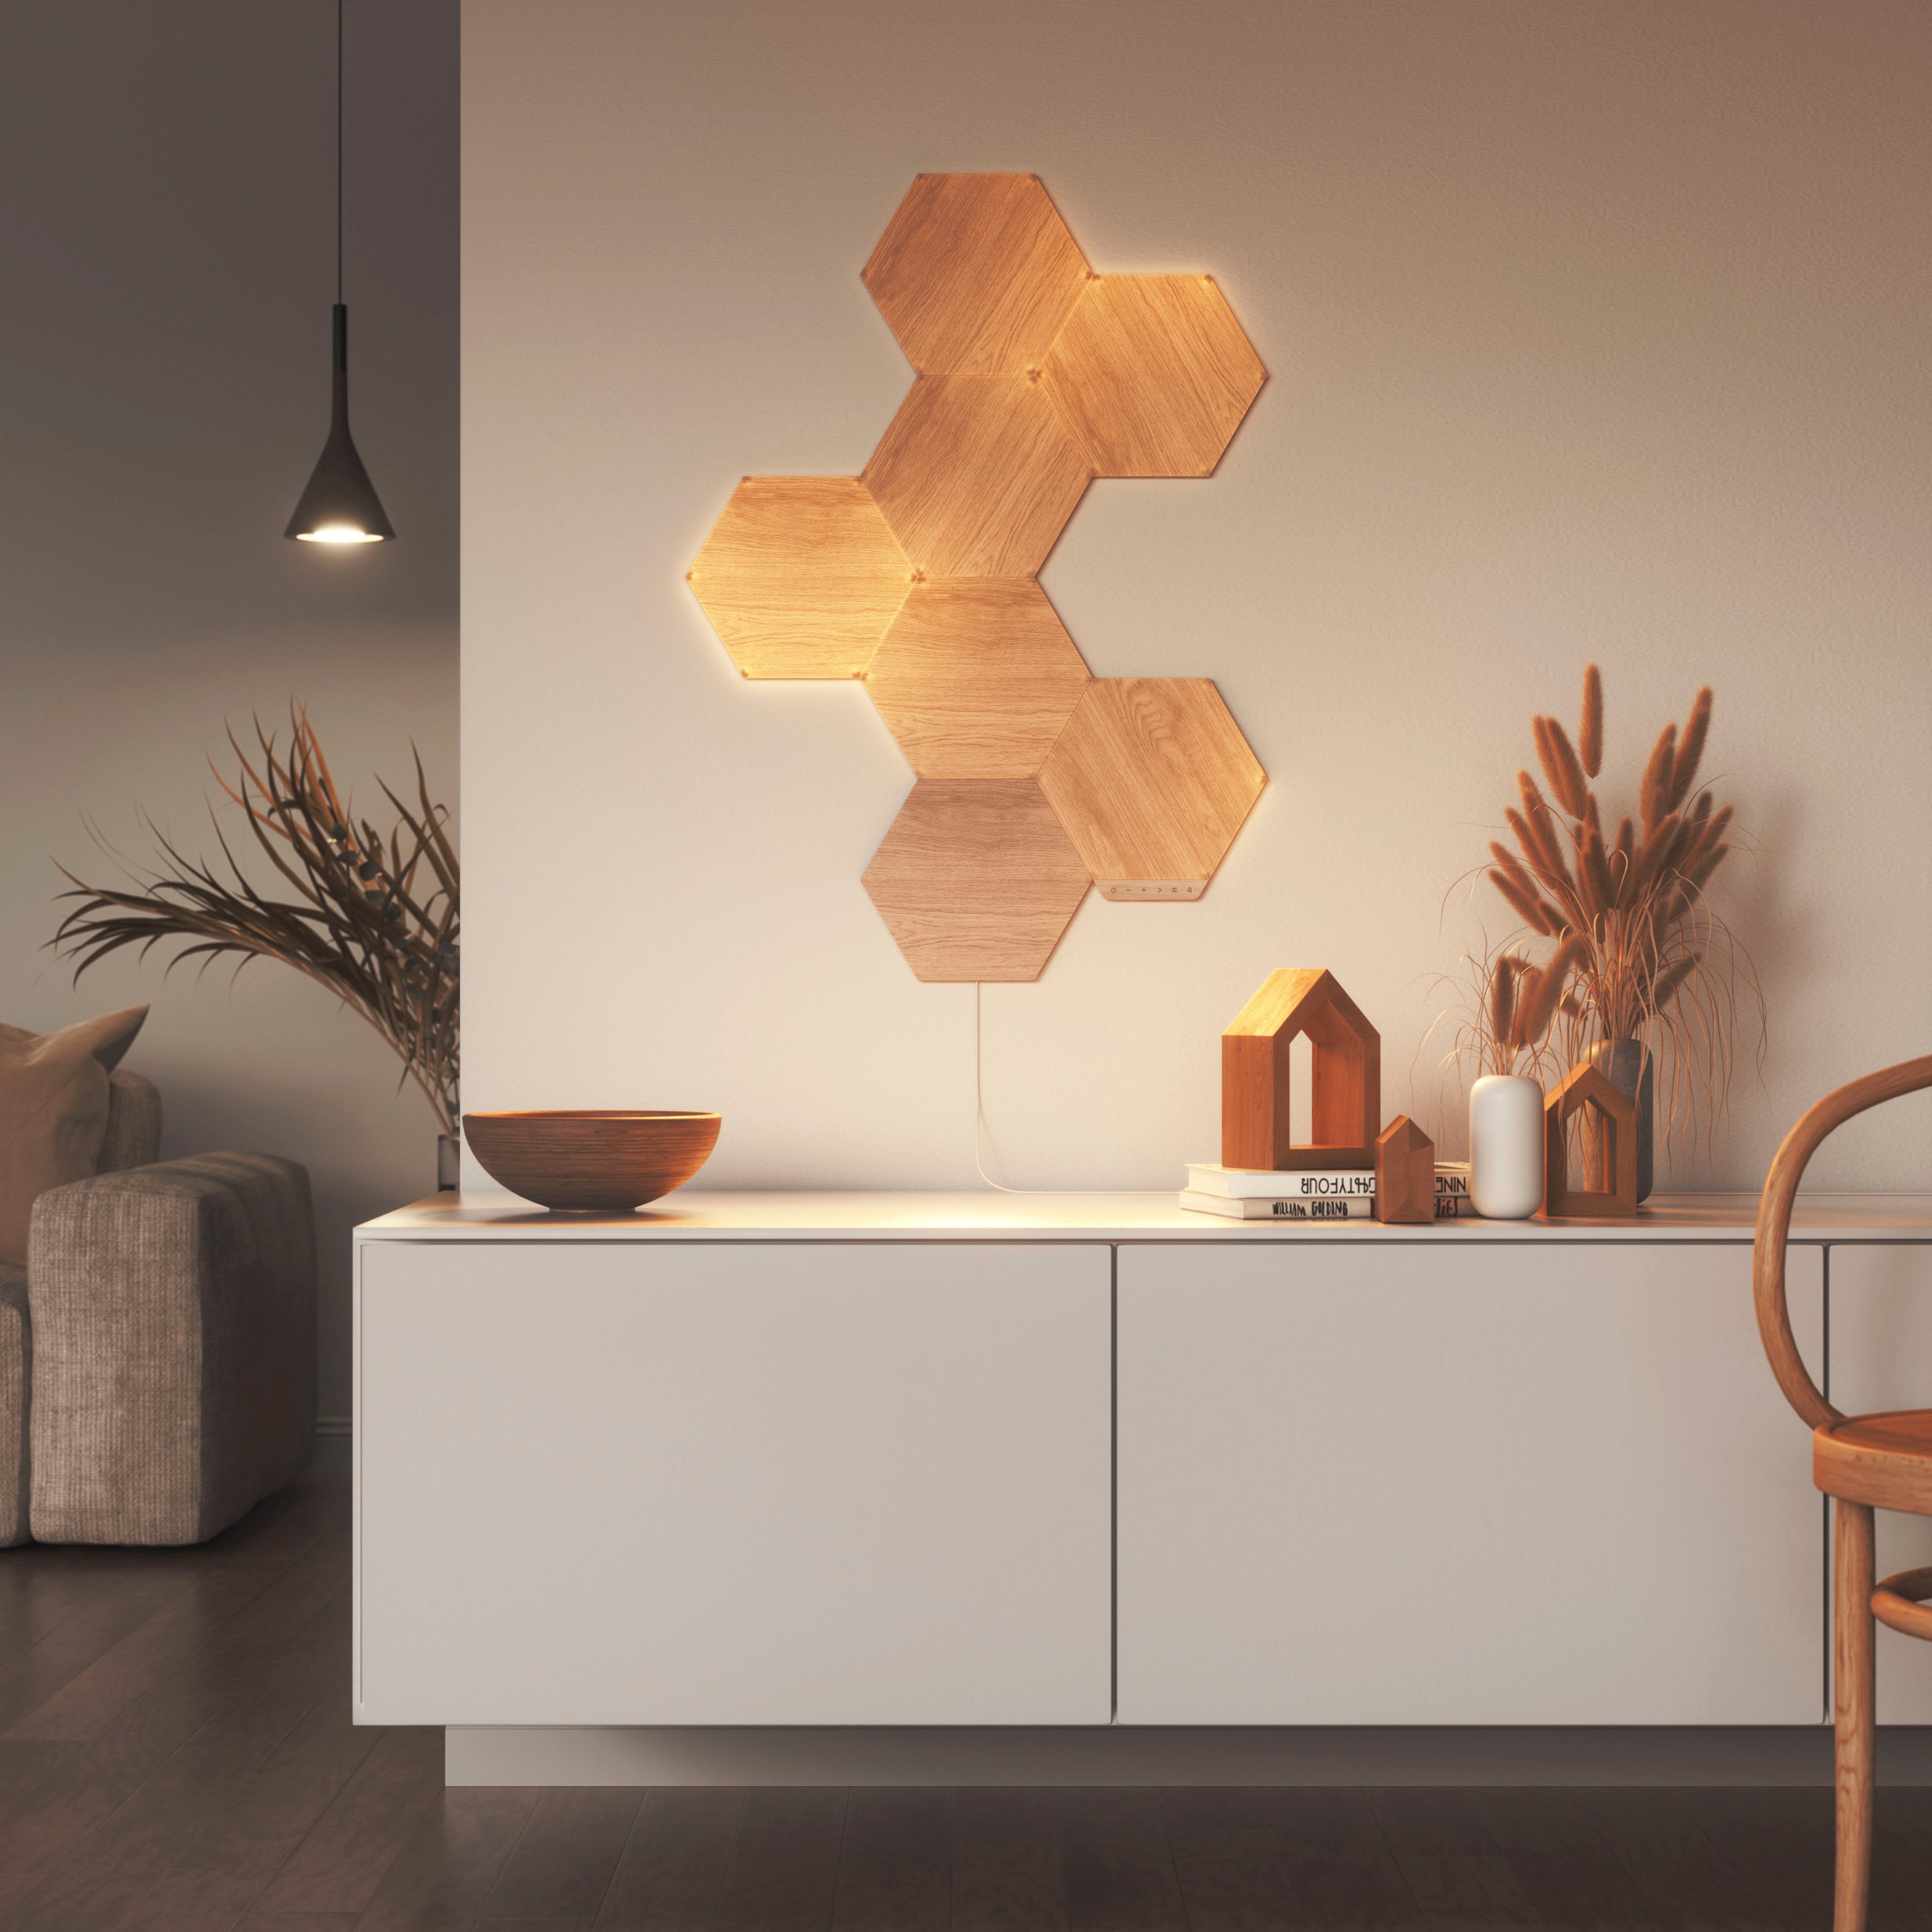 Nanoleaf Elements Hexagons Smarter Kit Buy (7 Look Best - Wood NL52-K-7003HB-7PK Panels)